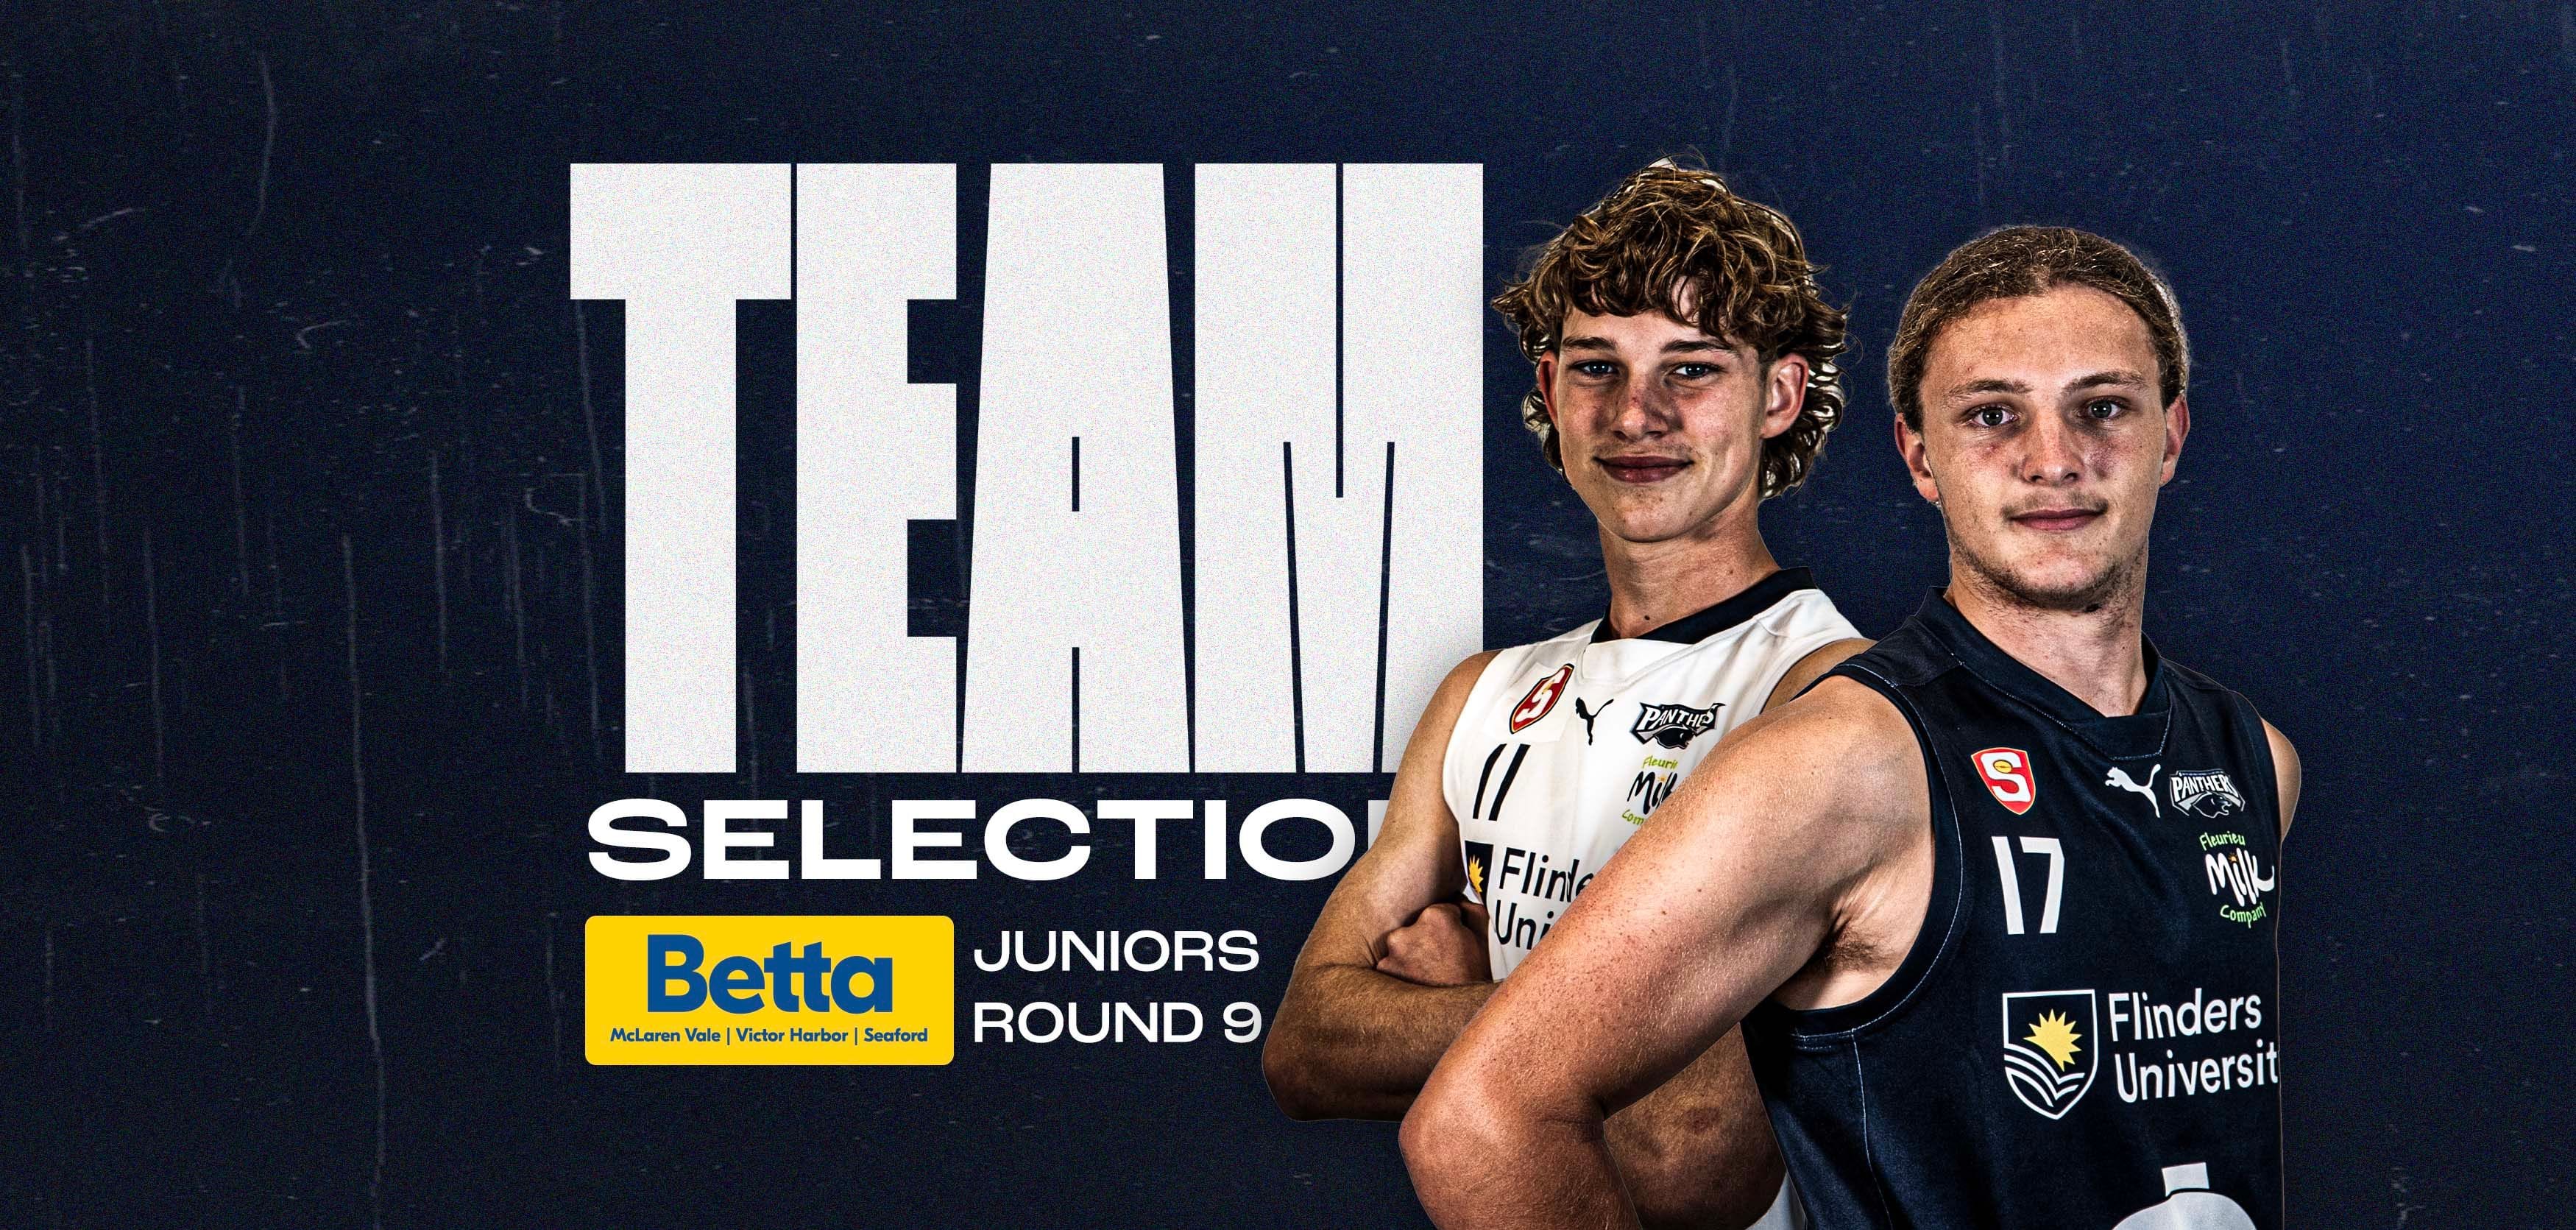 BETTA Team Selection: Juniors Round 9 v Sturt